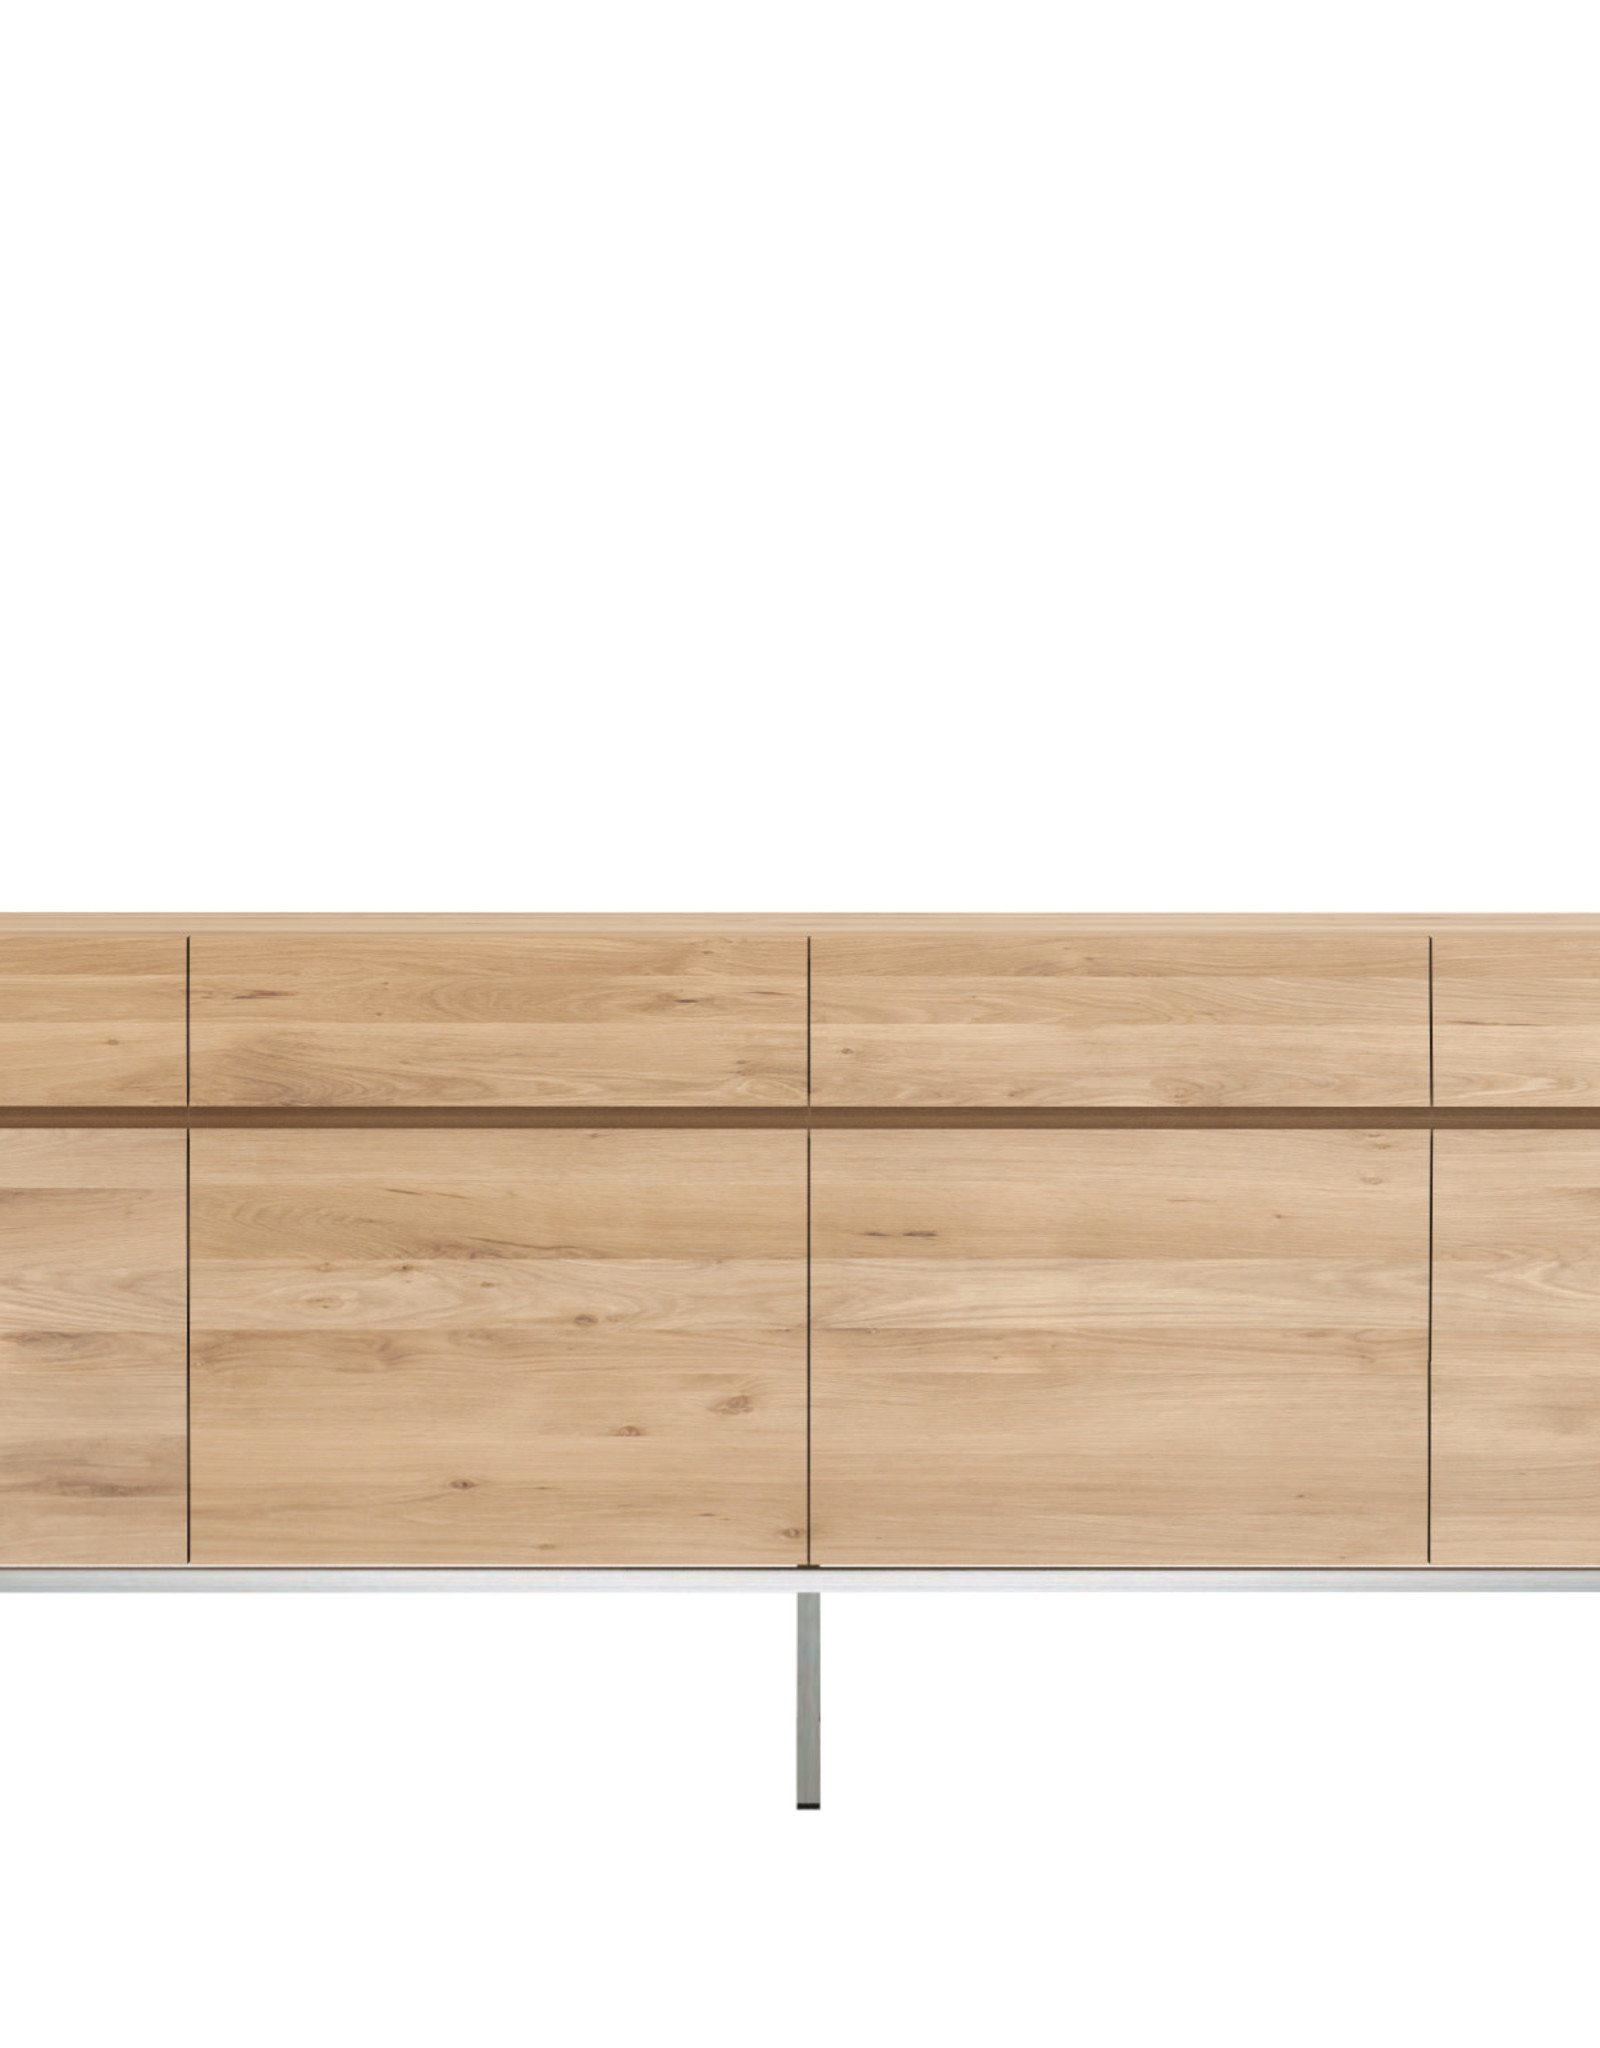 Oak Ligna Sideboard - 4 Doors - 4 Drawers